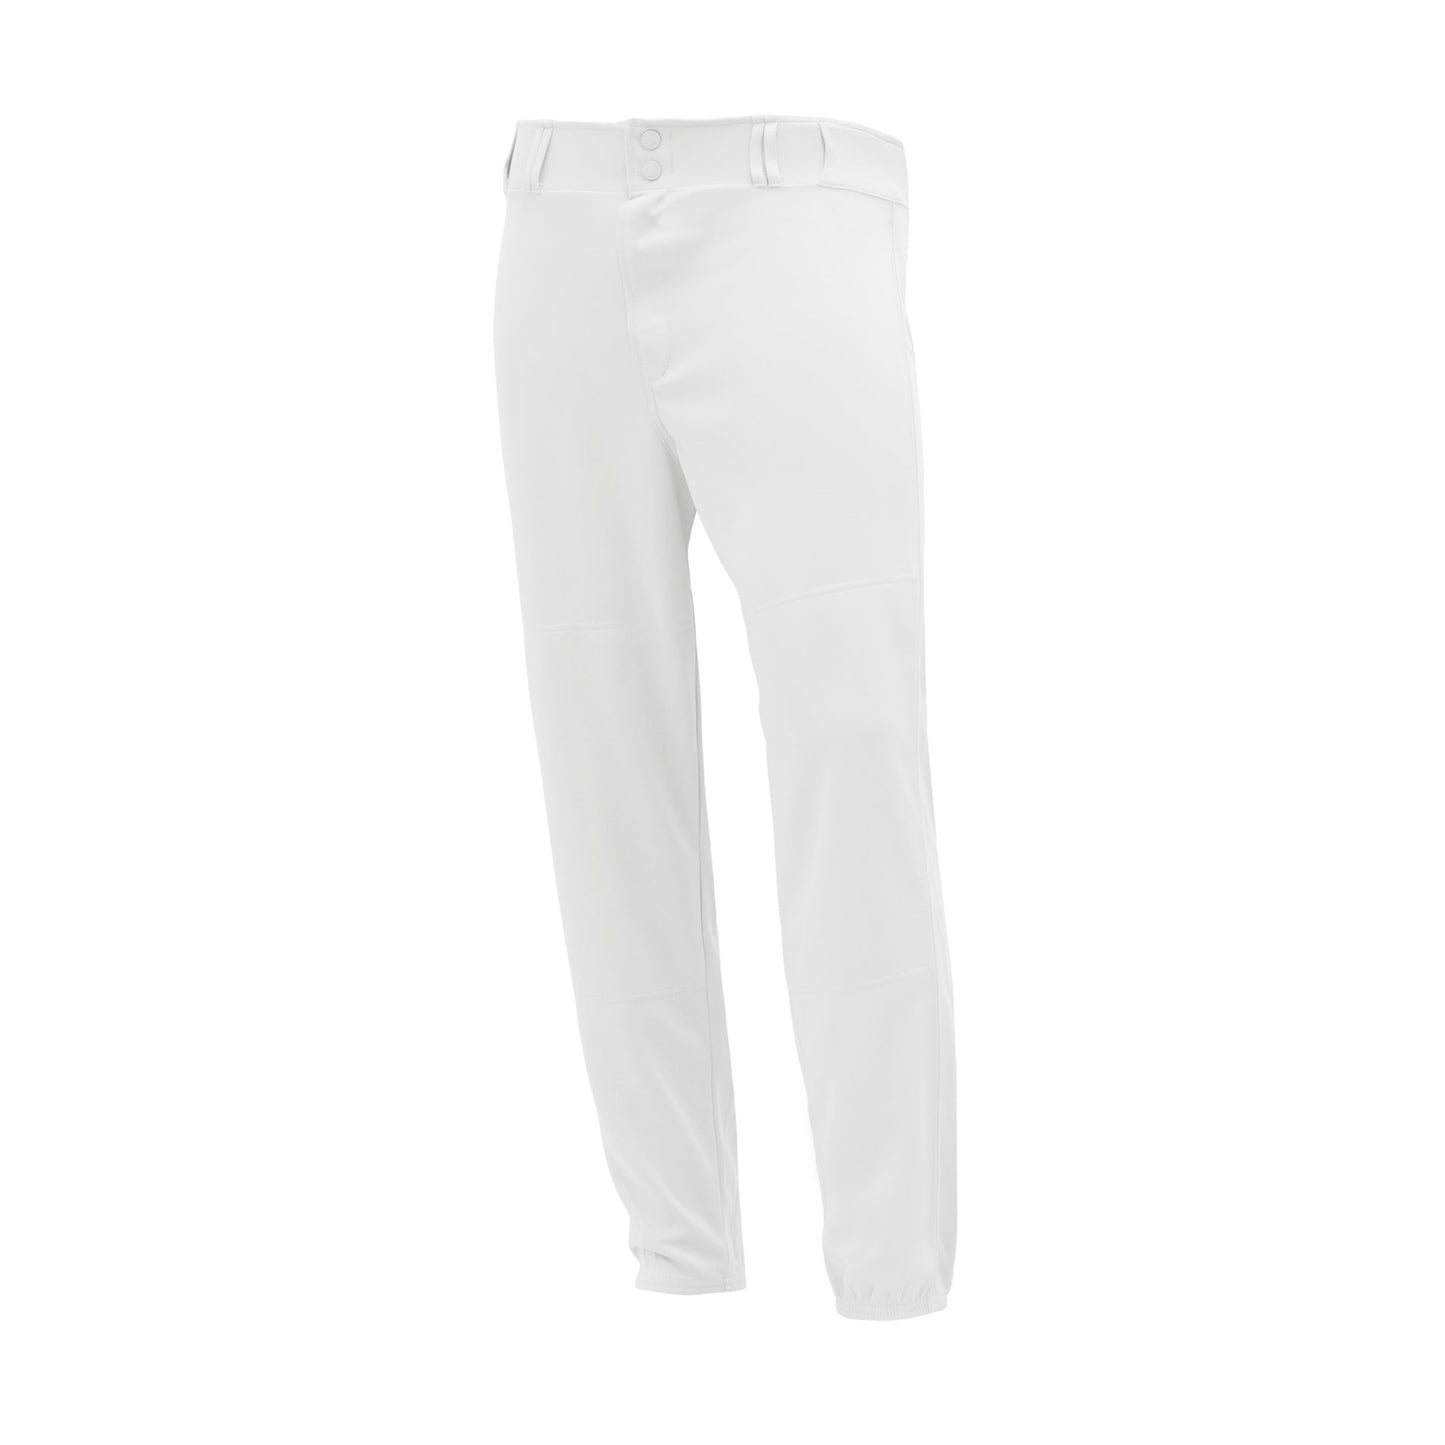 Premium Baseball Pants, Elastic Bottom, White, ba1380-000